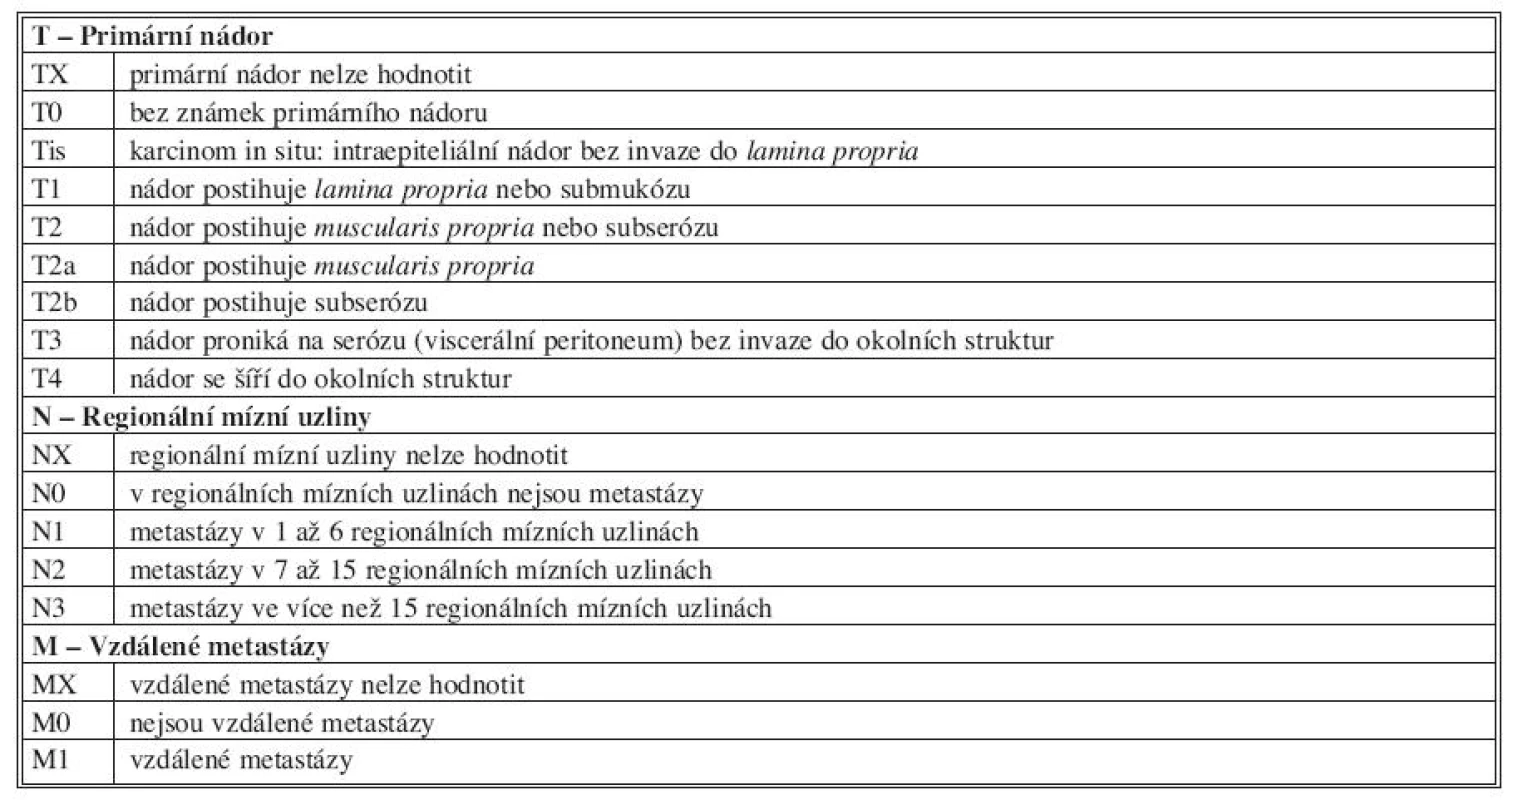 TNM klinická klasifikace nádorů žaludku
Tab. 11. TNM clinical classification of gastric carcinoma